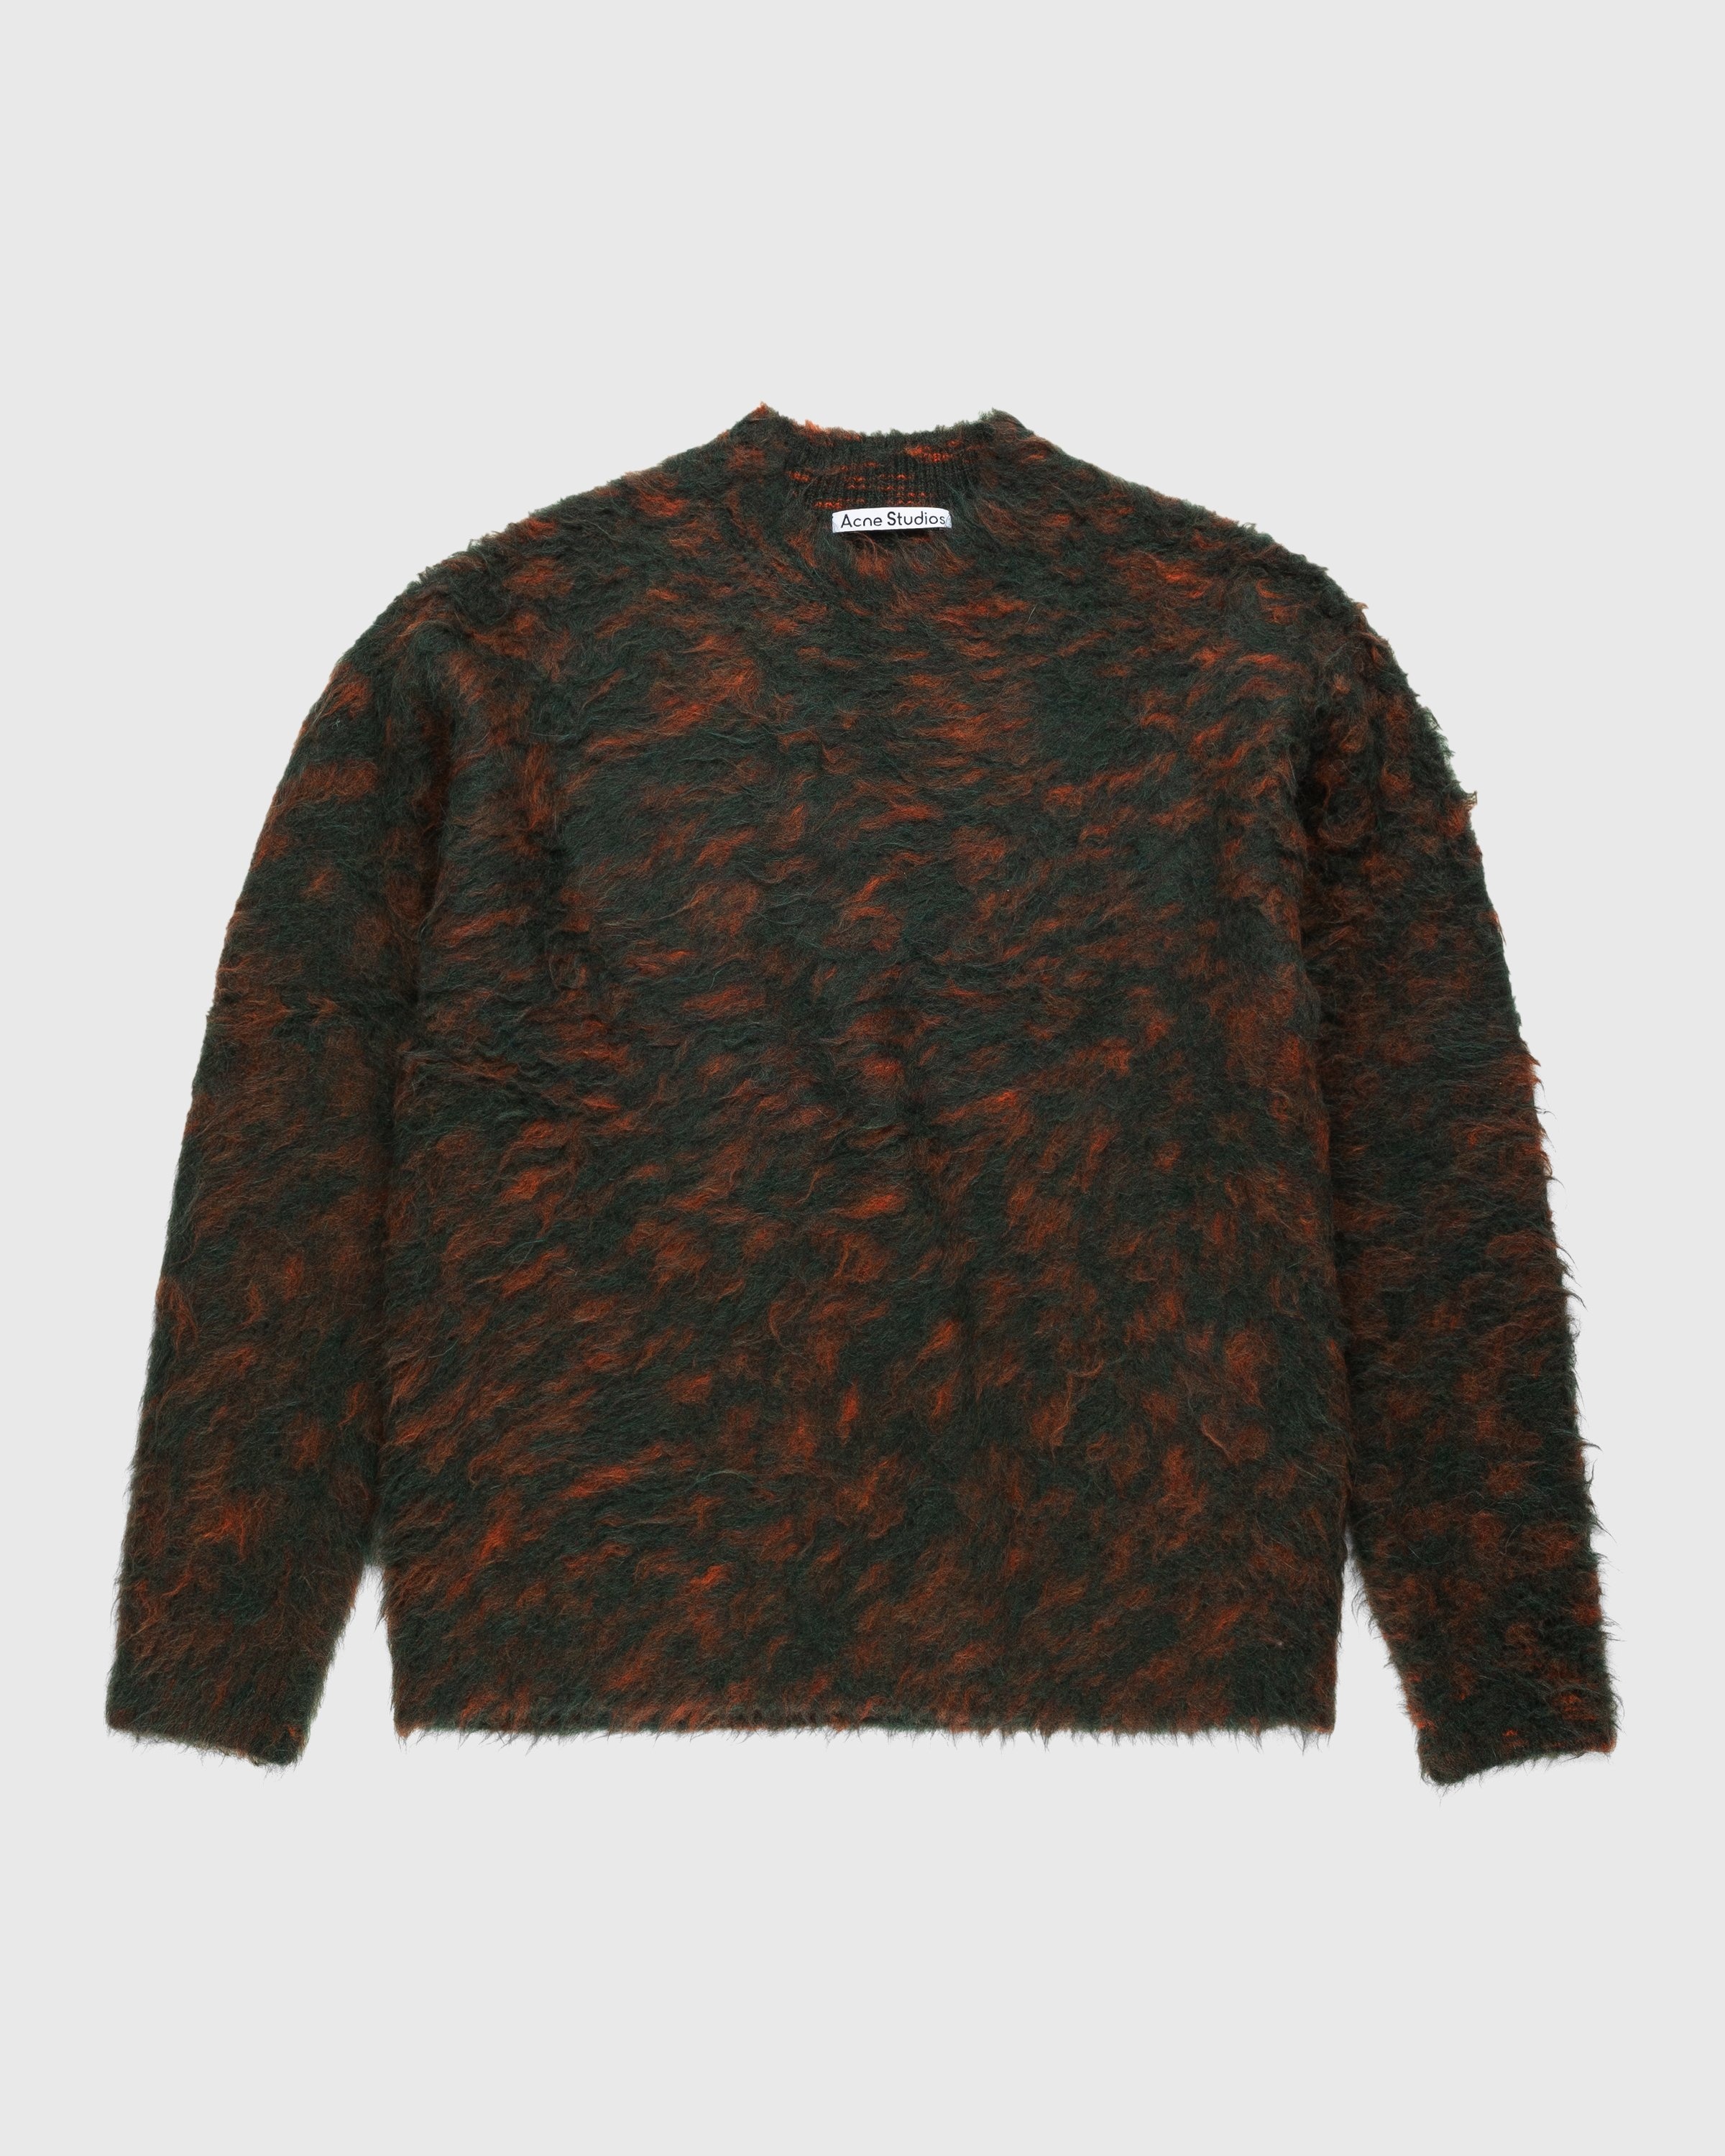 Acne Studios – Hairy Crewneck Sweater Green - Knitwear - Green - Image 1